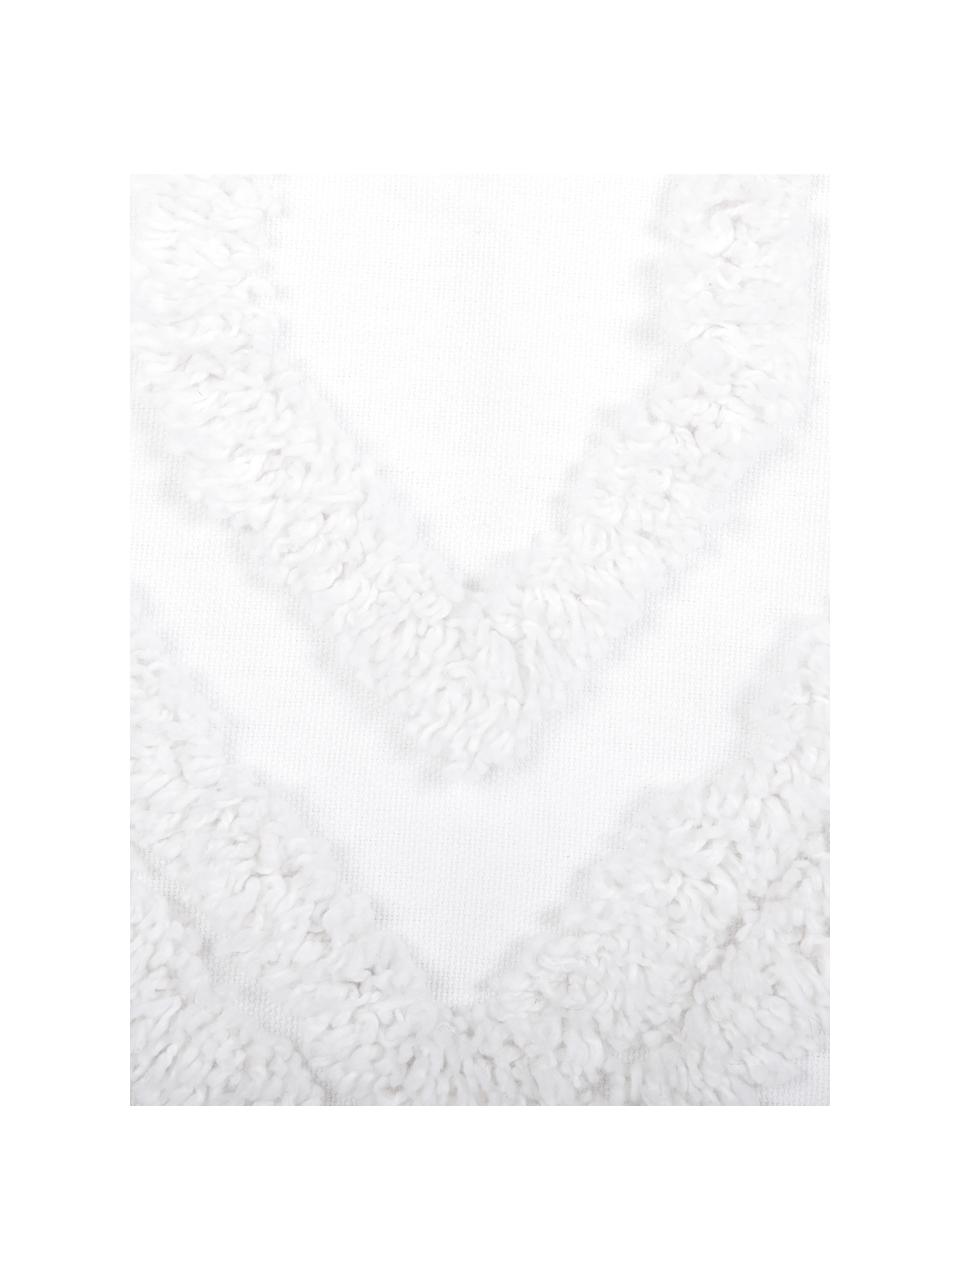 Kussenhoes Faye in wit met getuft patroon, Weeftechniek: panama, Wit, B 40 x L 60 cm